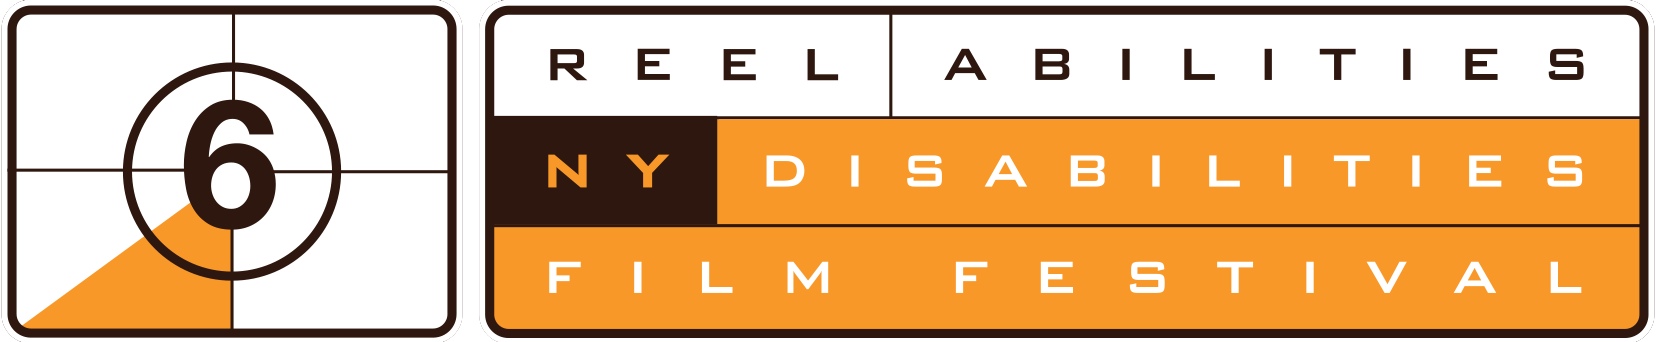 ReelAbilities_film_festival